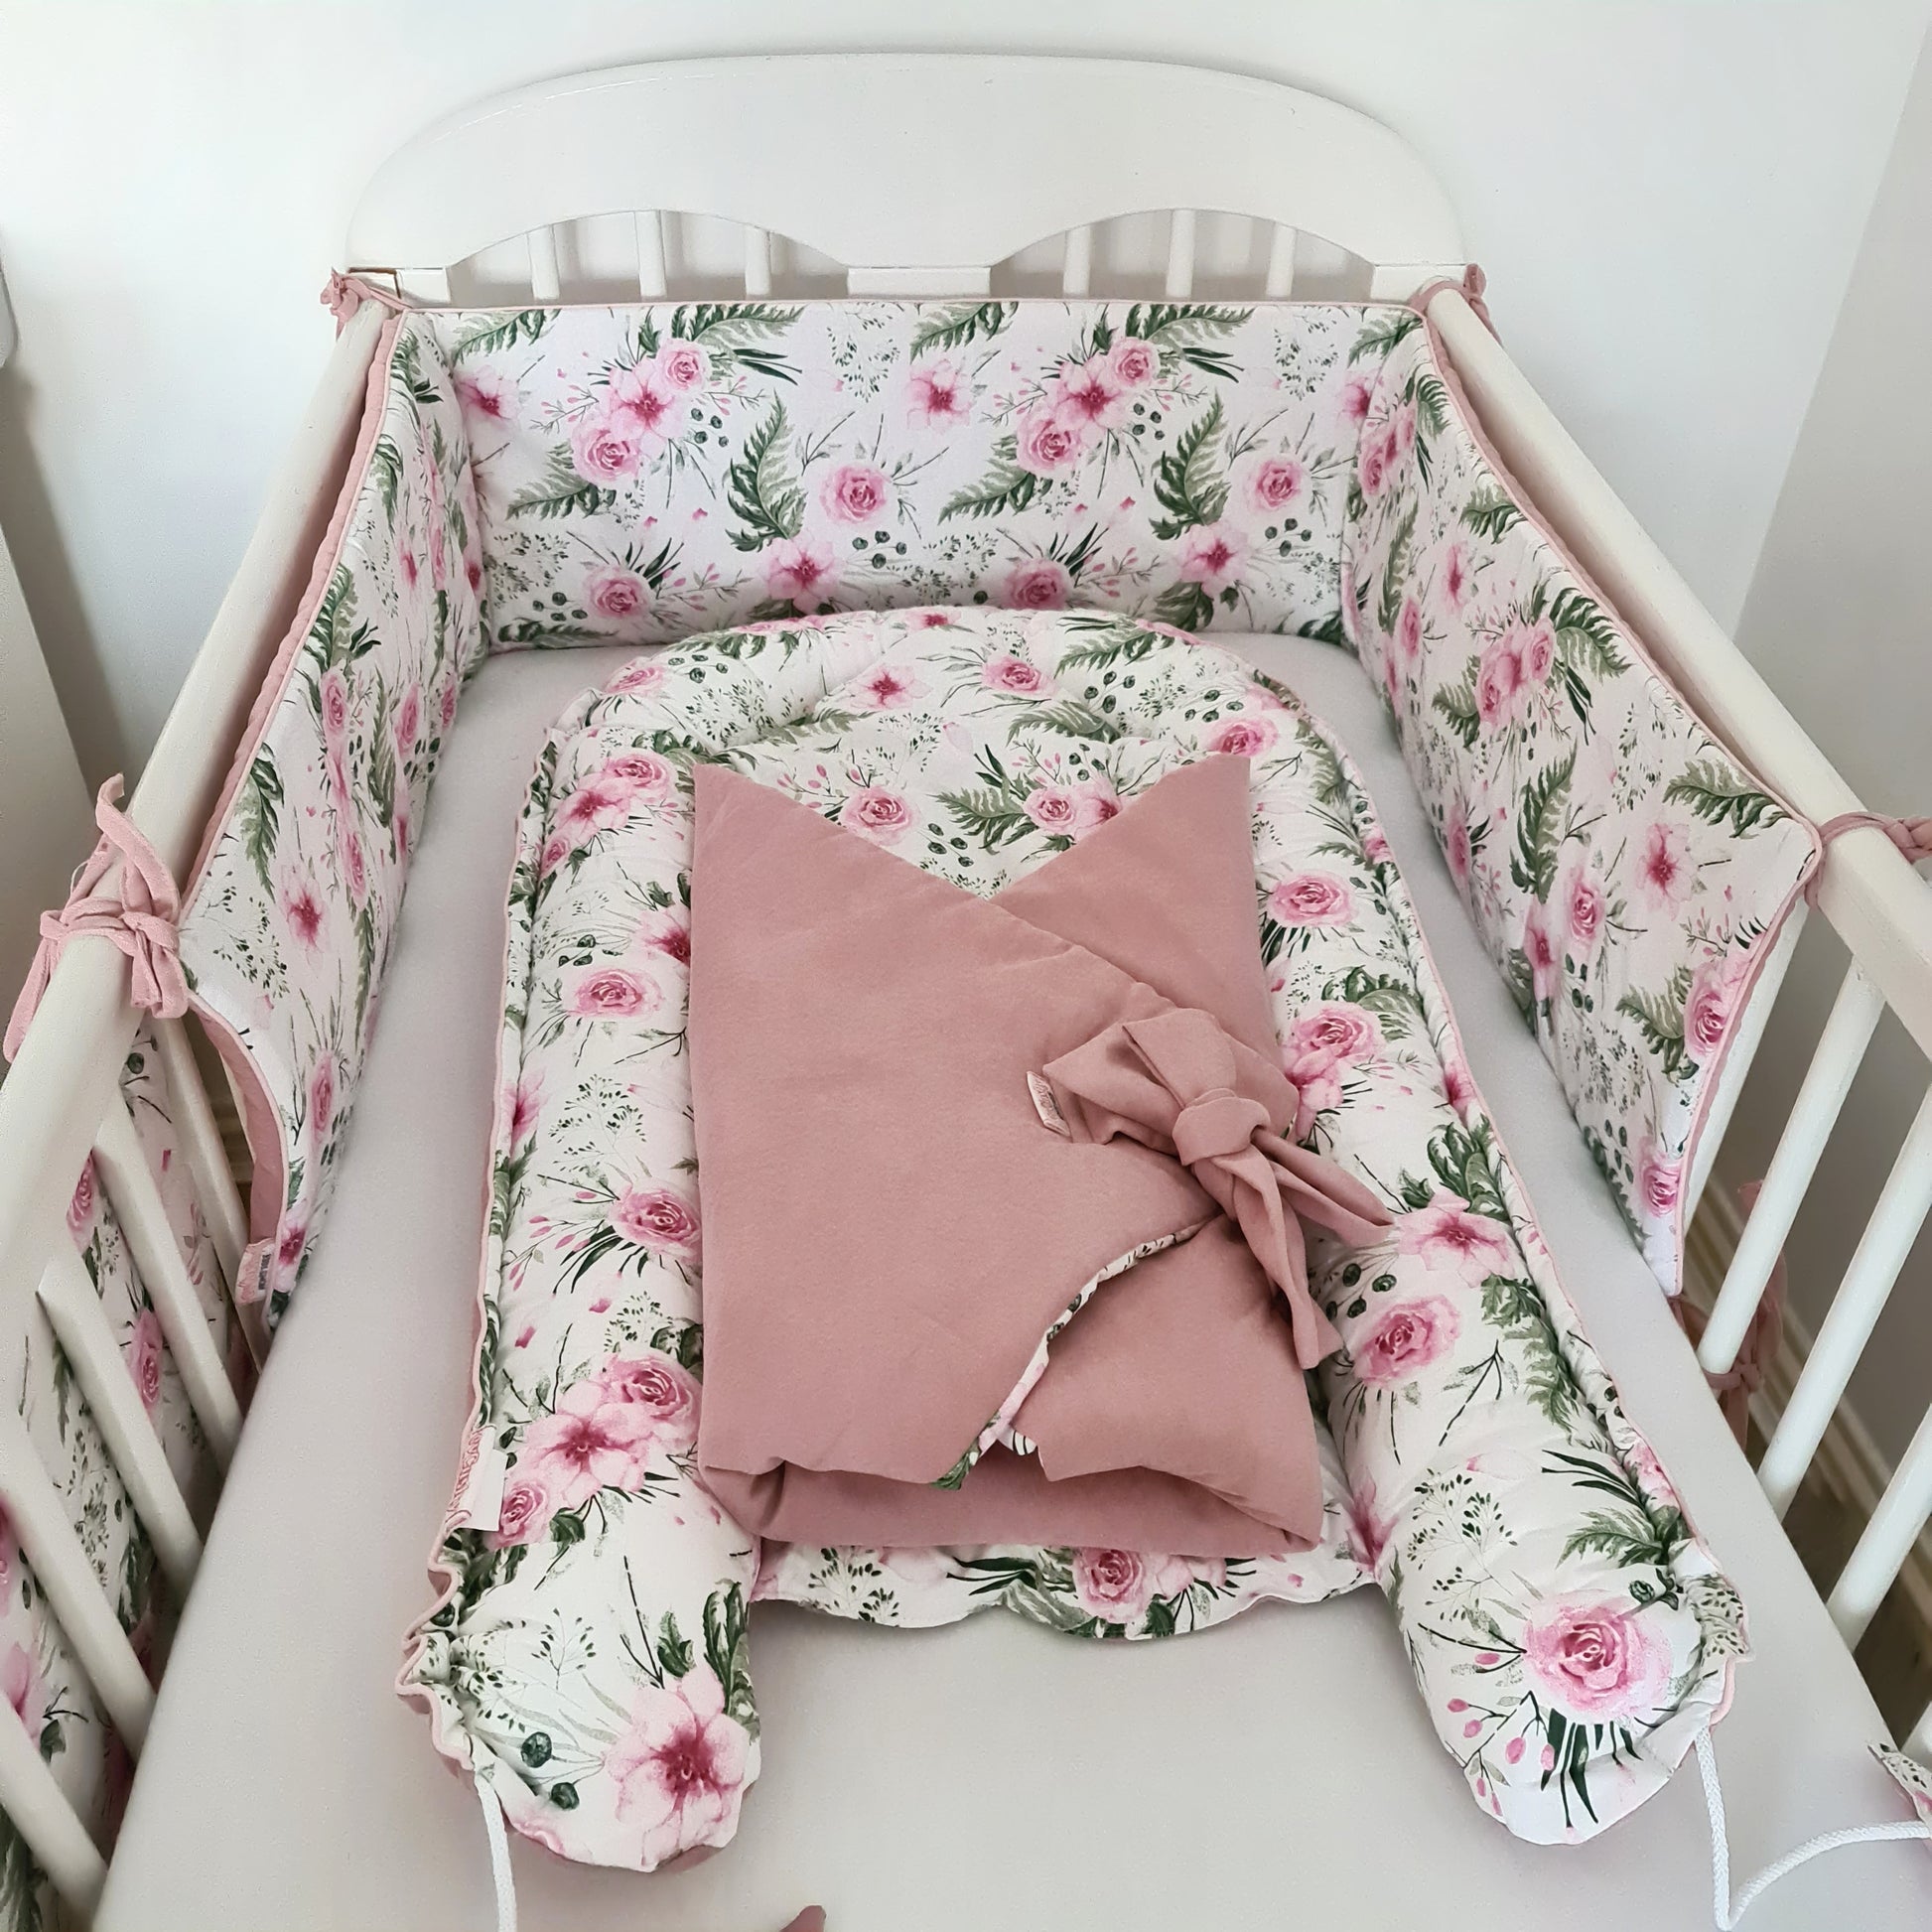 cot bedding nest pod cot bumper swaddle blanket for newborn